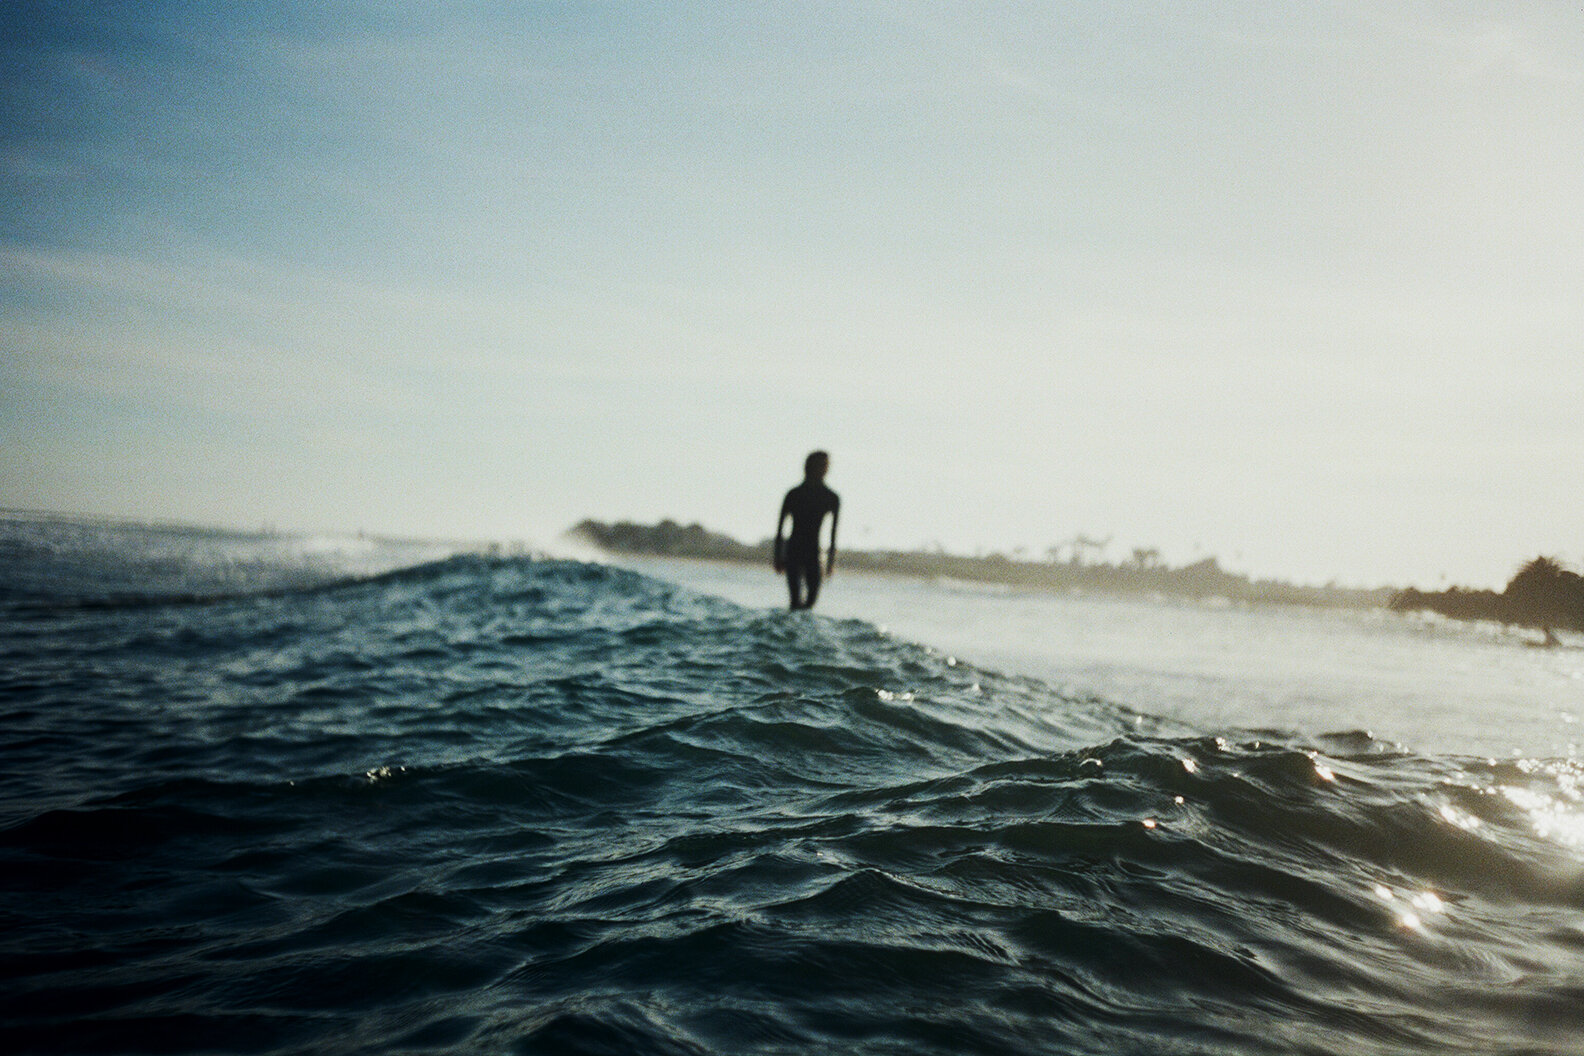 First point water texture_blurred surfer_0035.jpg